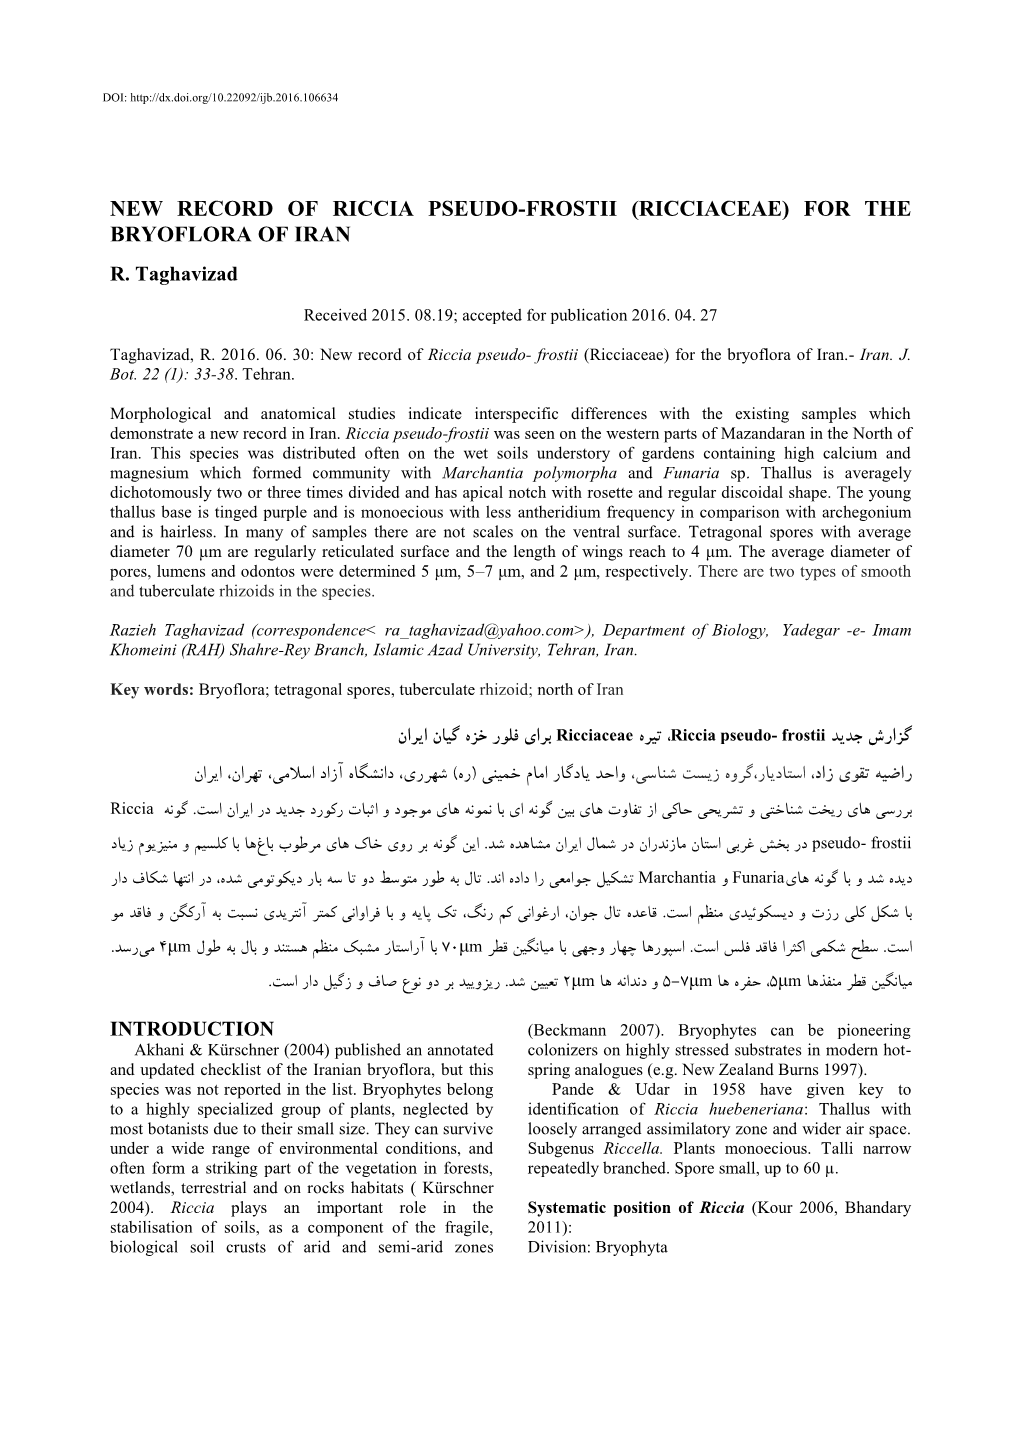 New Record of Riccia Pseudo-Frostii (Ricciaceae) for the Bryoflora of Iran